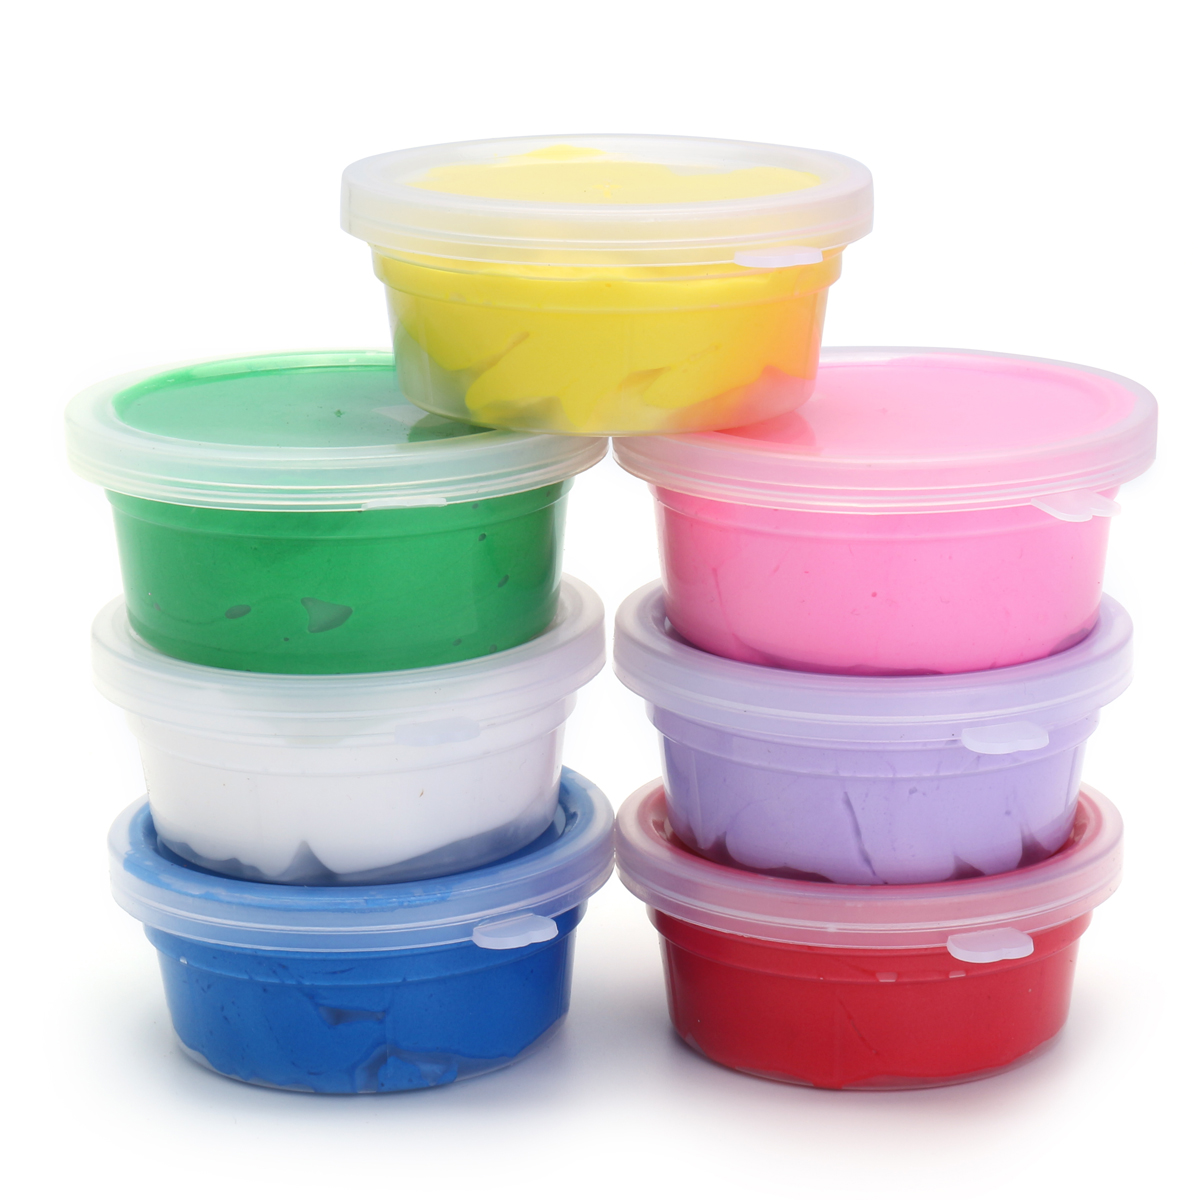 DIY-Slime-Kit-Snow-Mud-Clay-Plasticine-Styrofoam-Beads-Balls-White-Floam-Toy-Gift-1192180-2